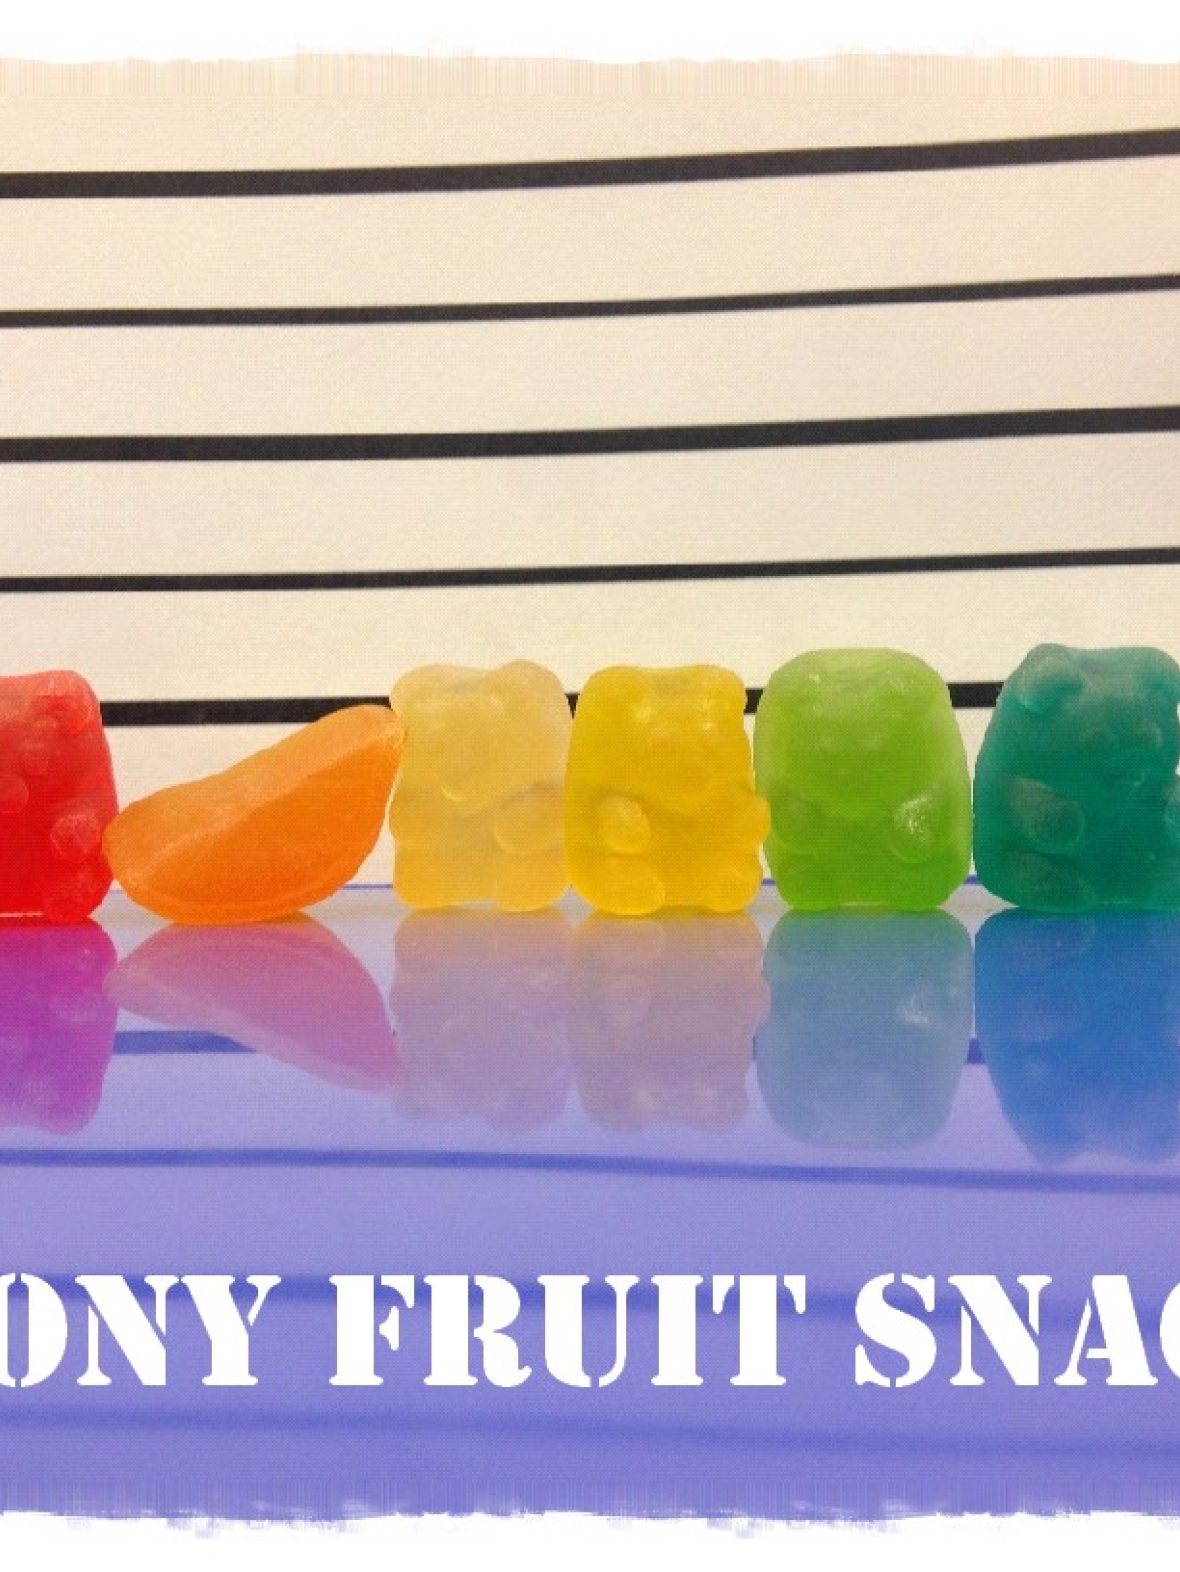 General Mills: Stop Marketing Betty Crocker Fruit Snacks to Children